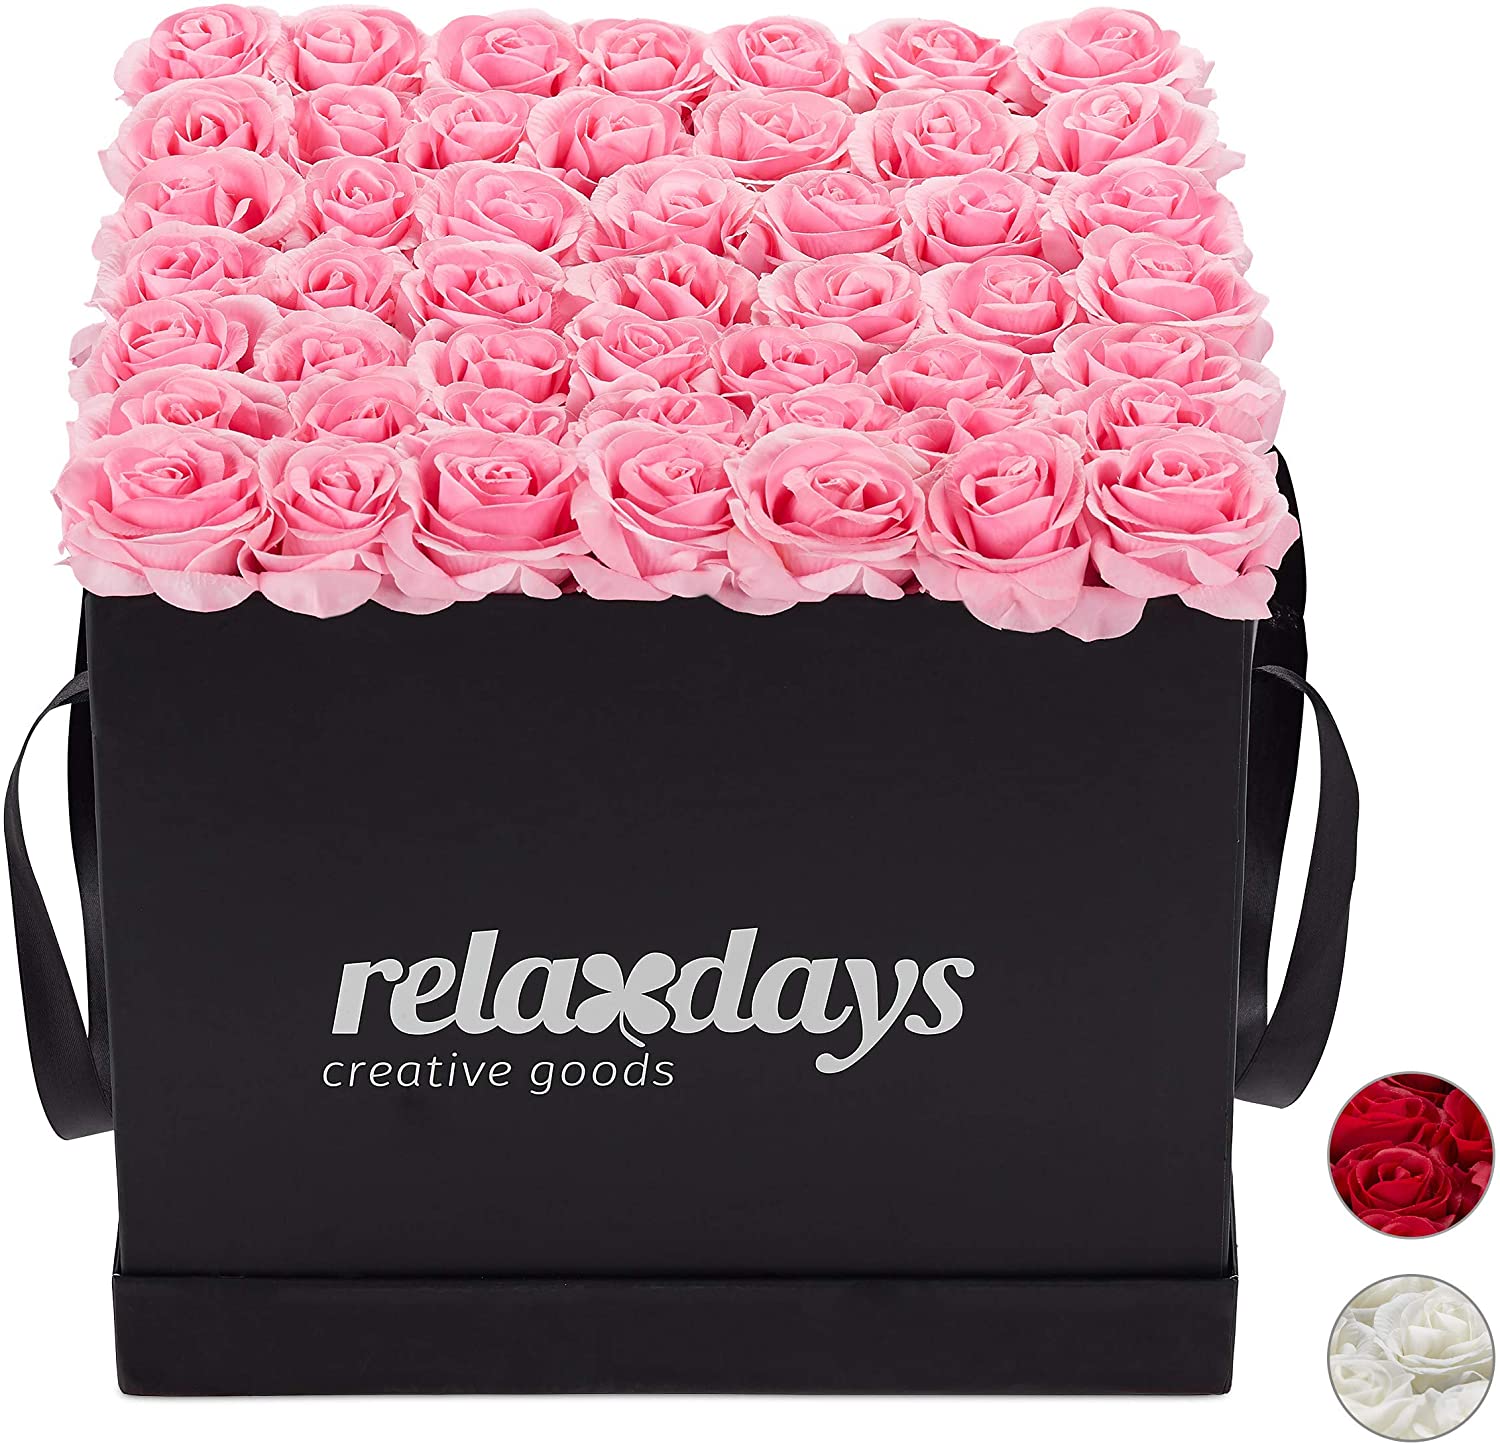 Relaxdays Square Rose Box 49 Roses Flower Box Black 10 Year Shelf Life Gift